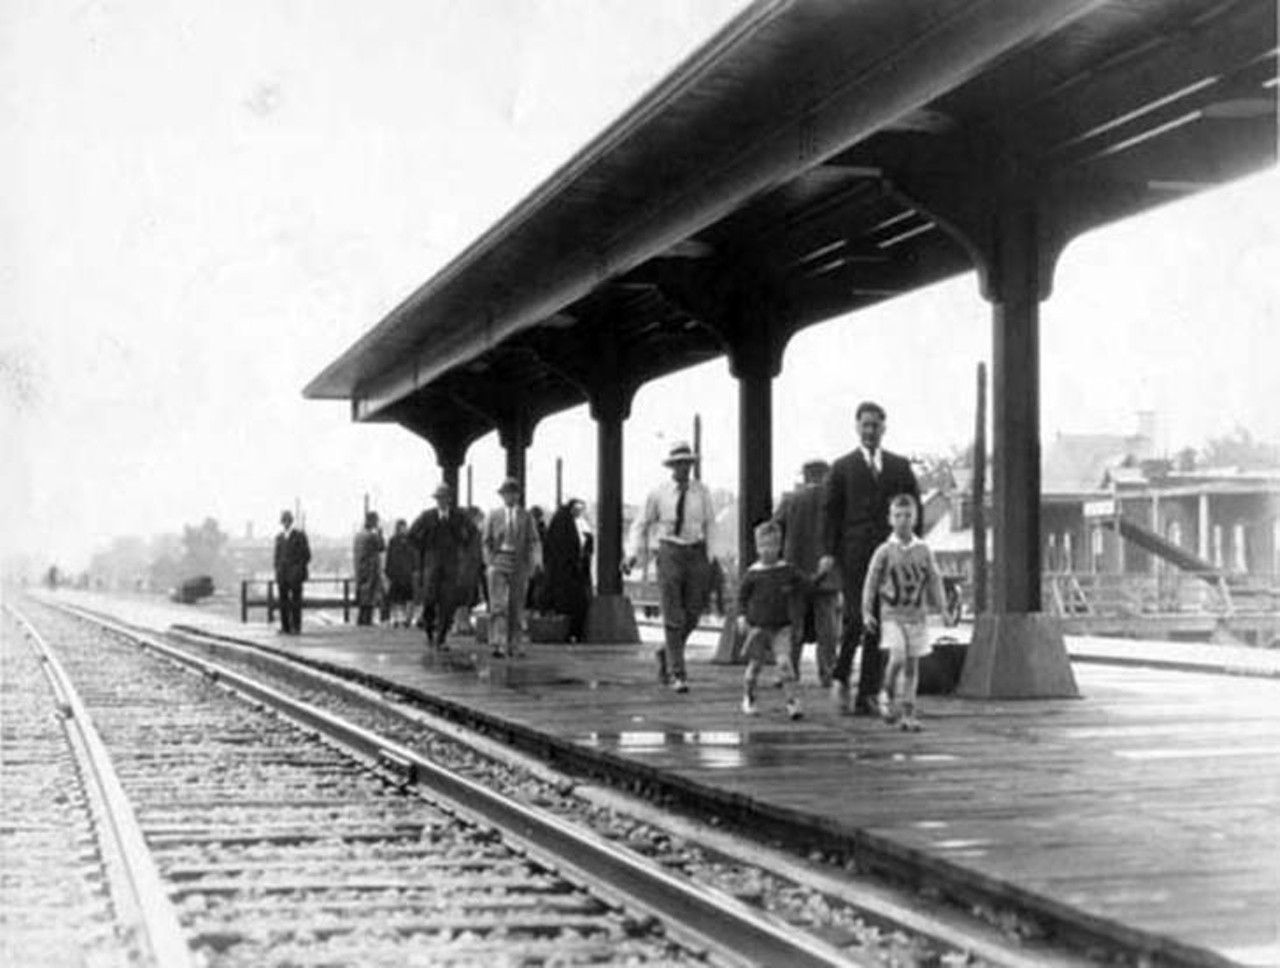  East Cleveland Railroad Platform, 1930 